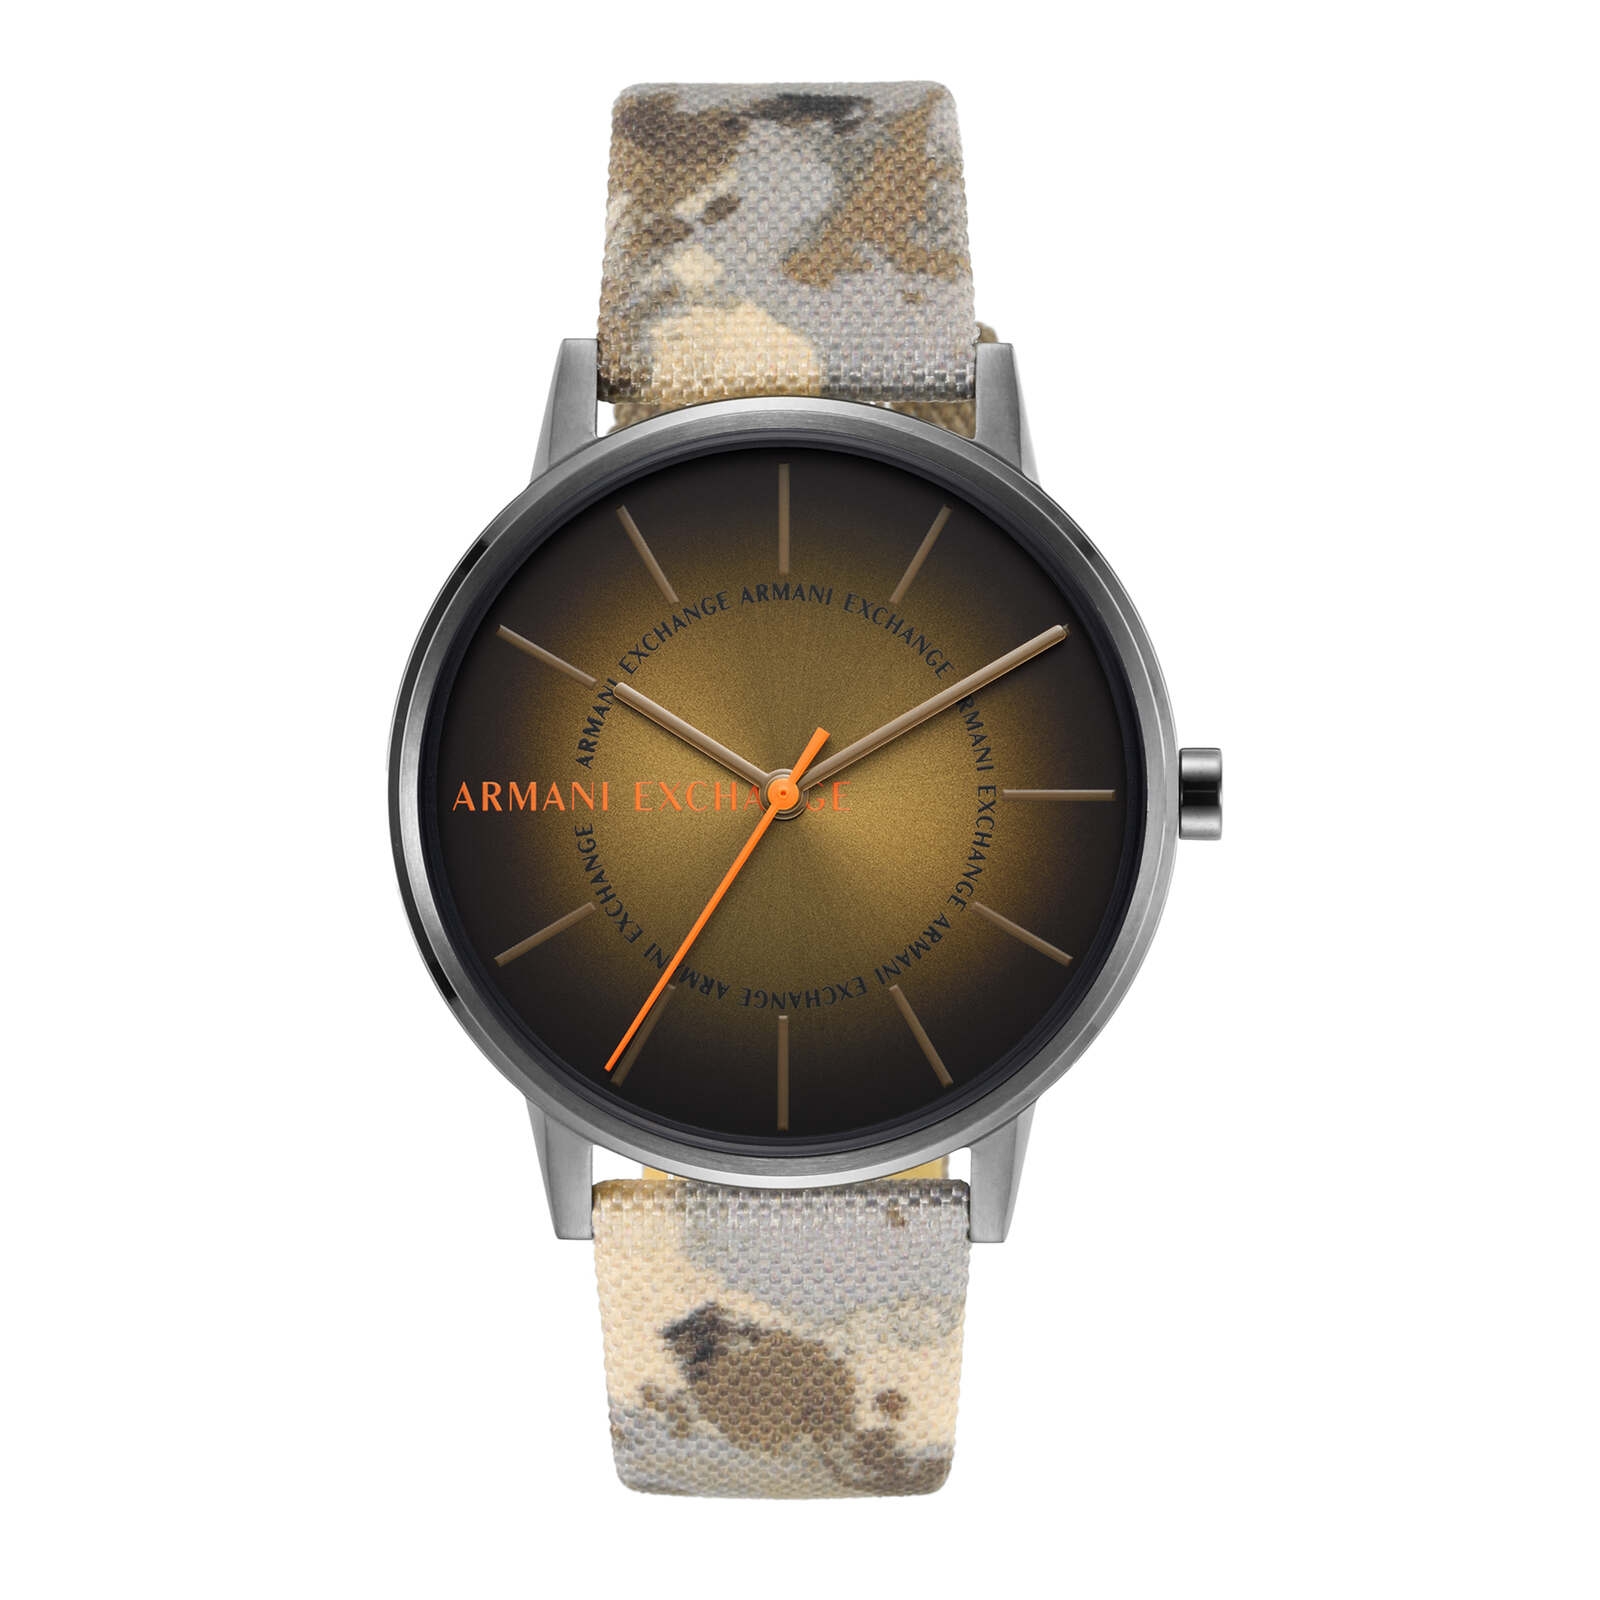 NEW Armani Exchange Men's Stainless Steel Watch AX2706 with Dark Brown Band  | eBay